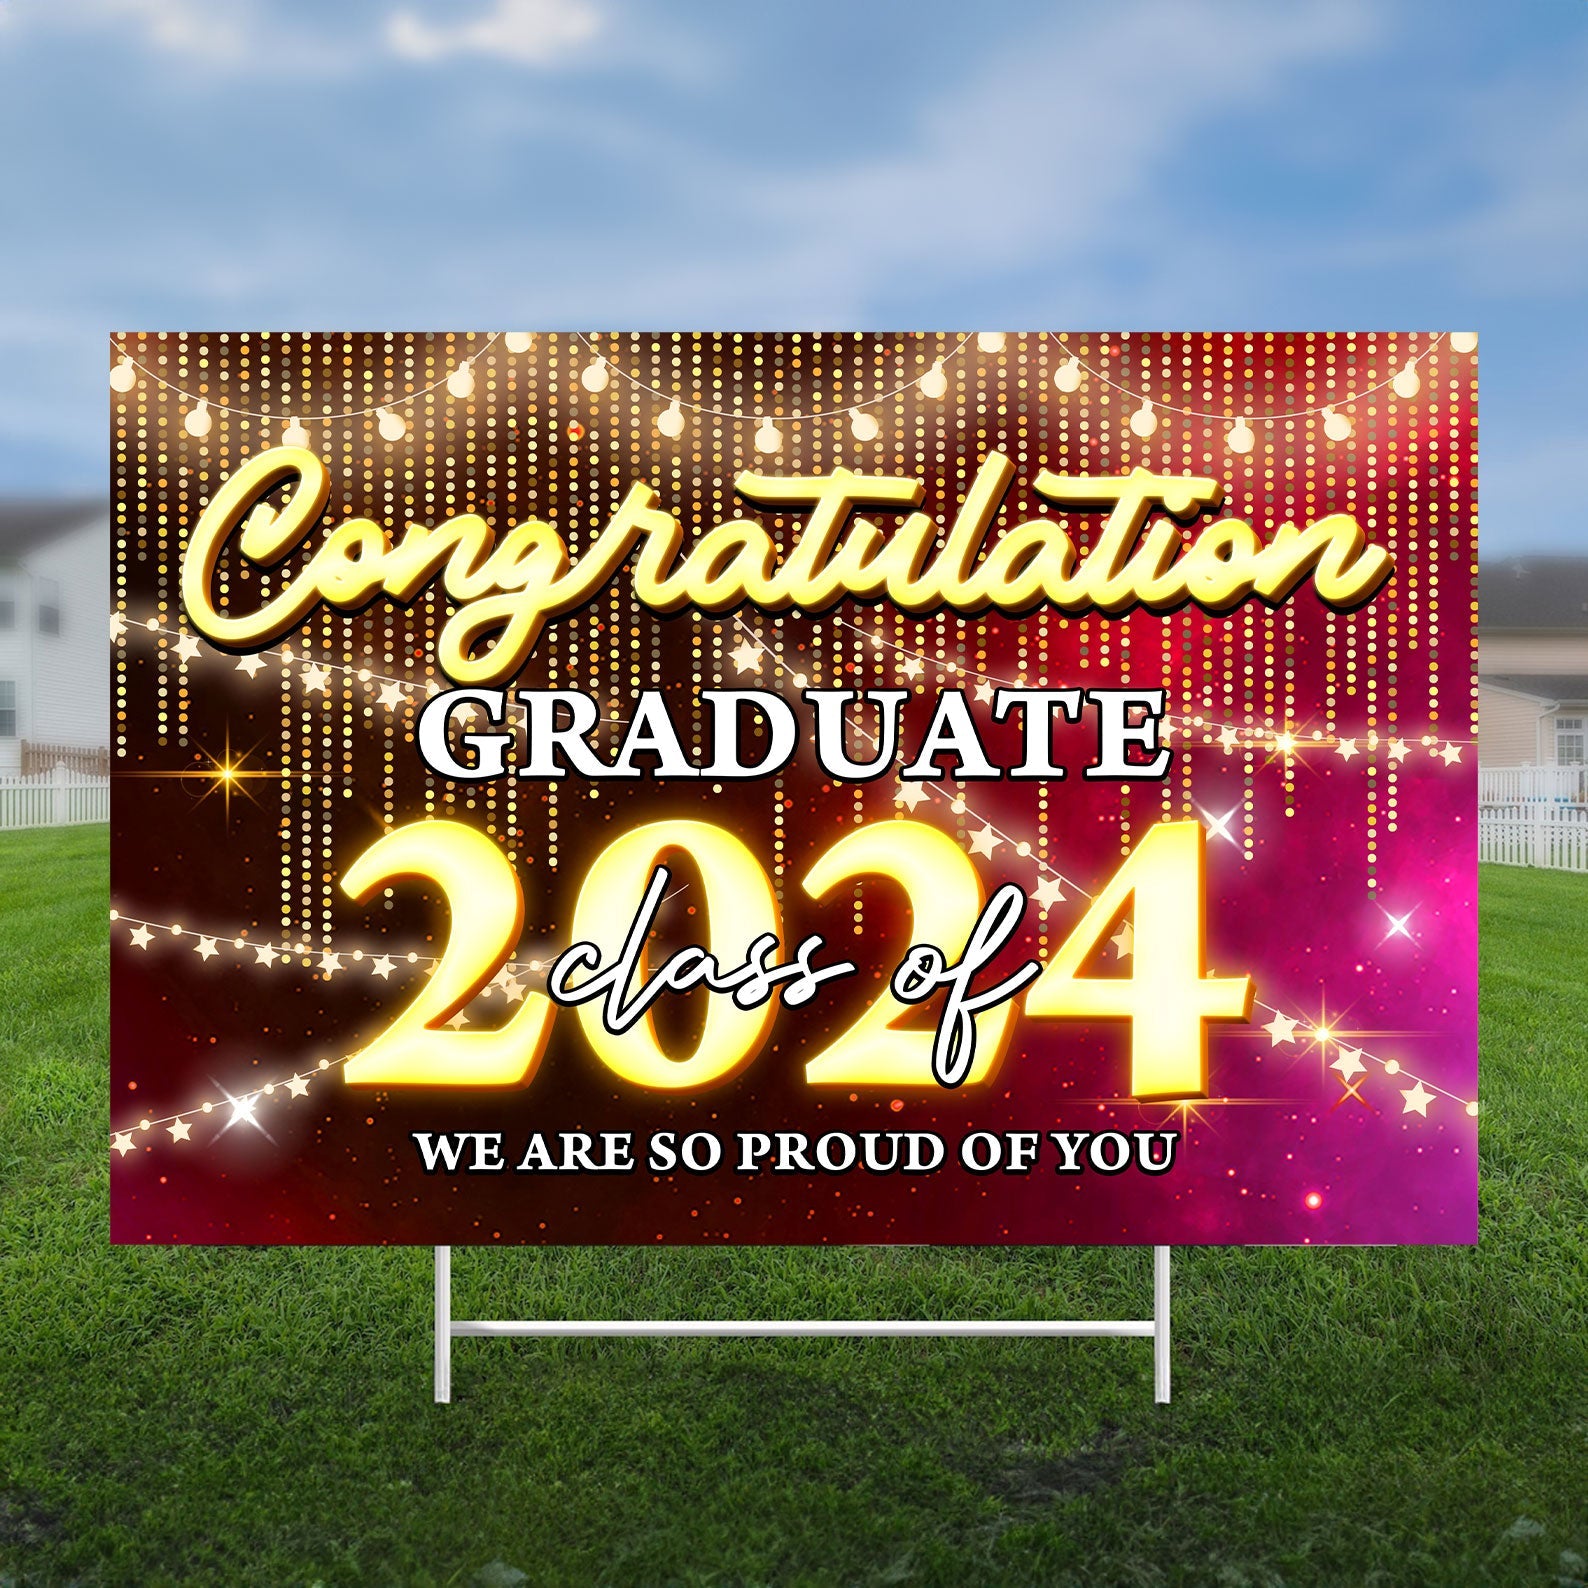 Congrats Graduation Class Of 2024 - Graduation Party Welcome Sign - Custom Photo Grad Party Sign - Personalized Graduation Decoration